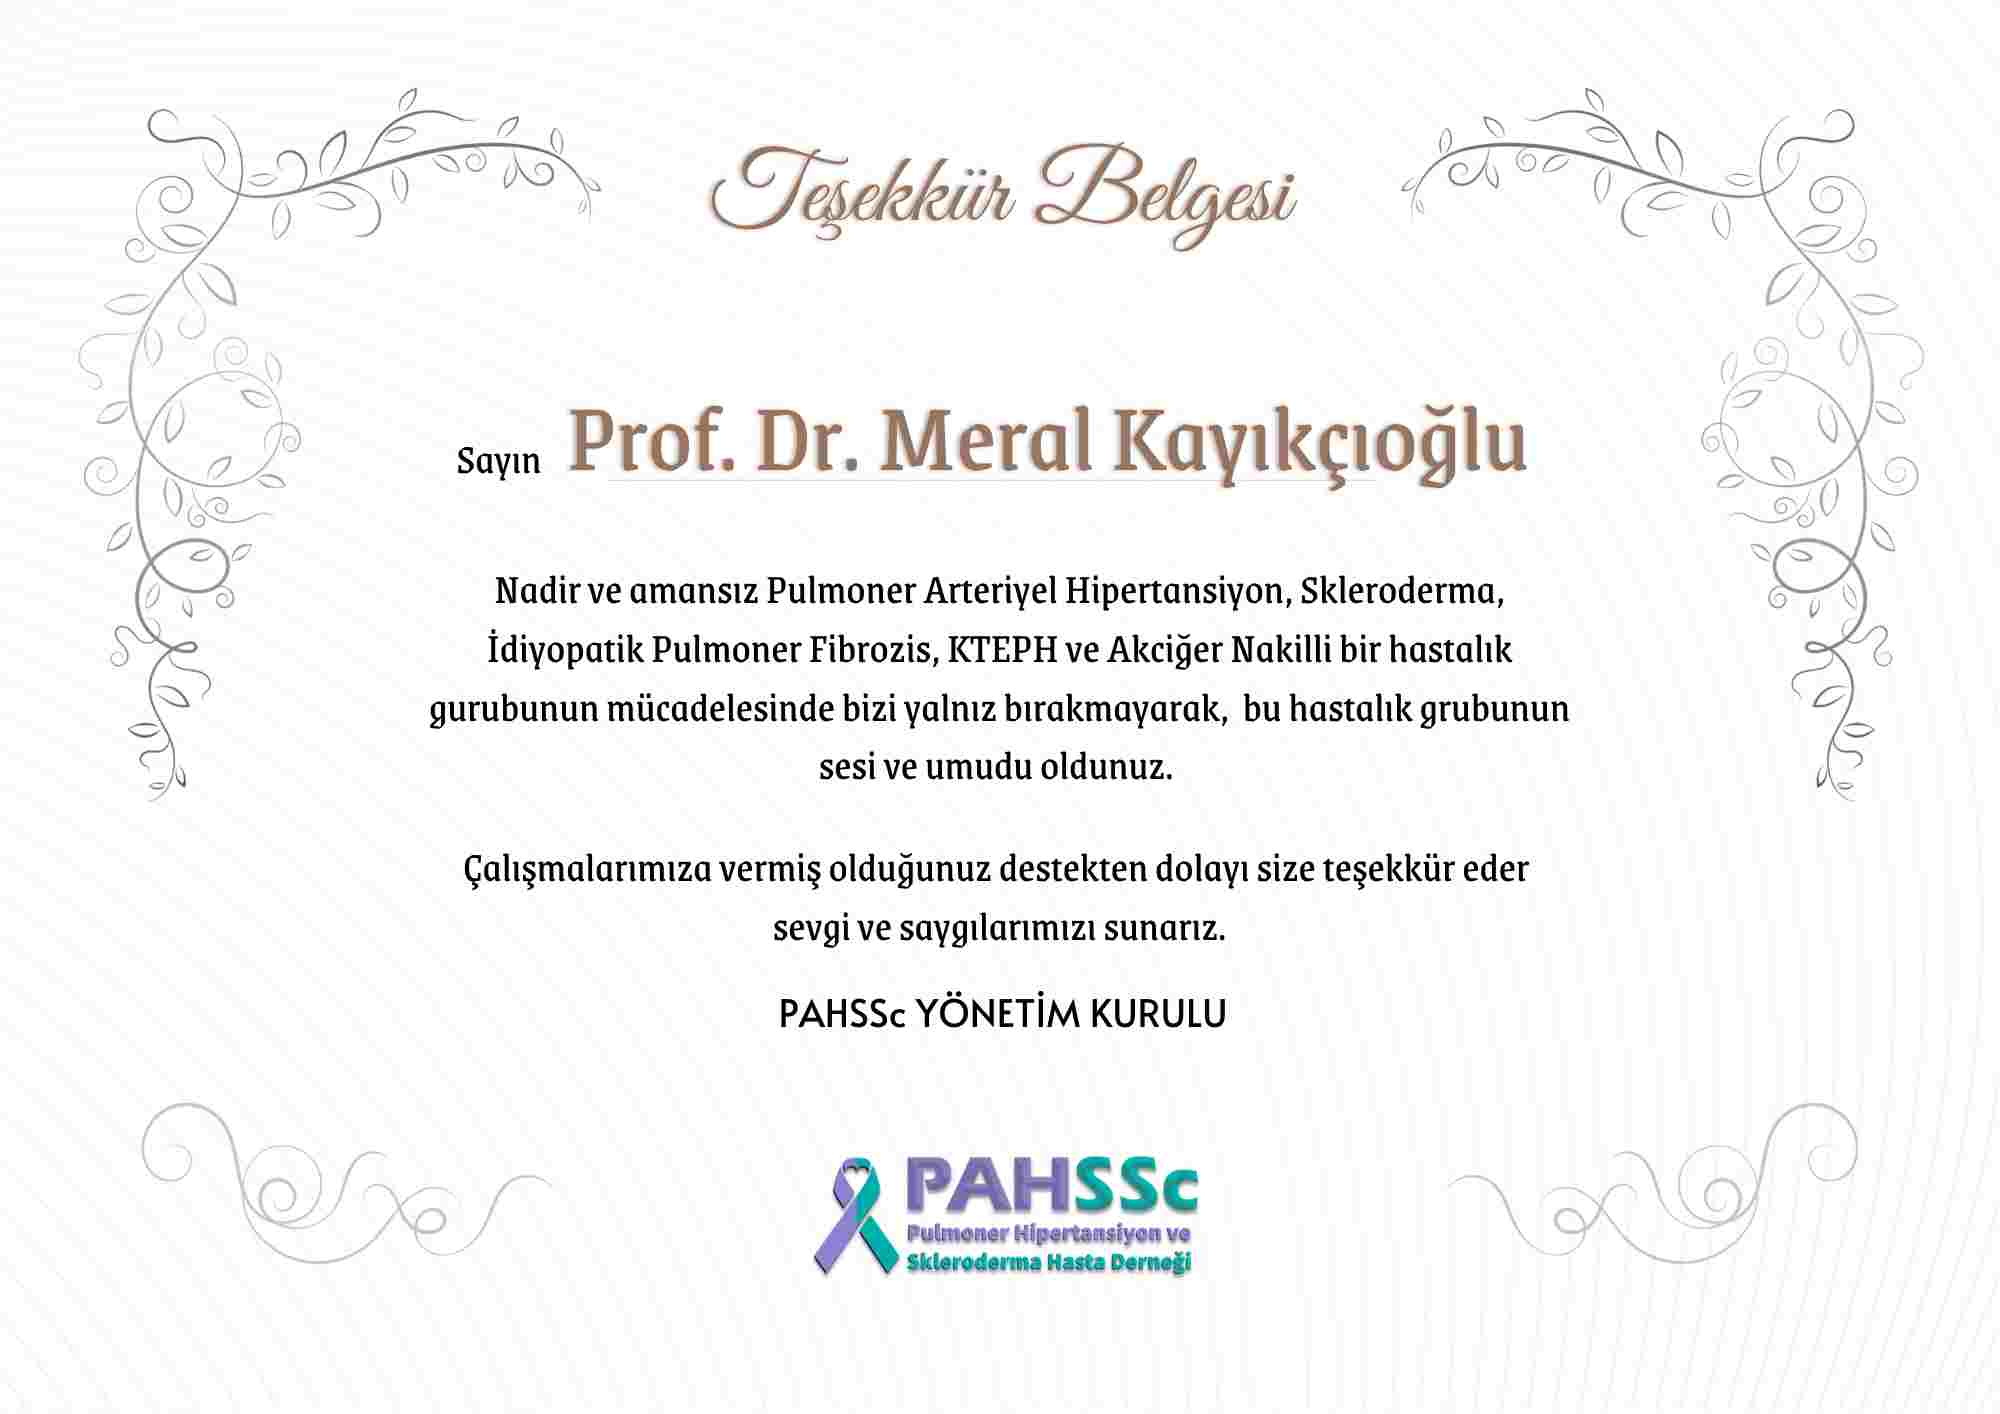 Prof. Dr. Meral Kayıkçıoğlu